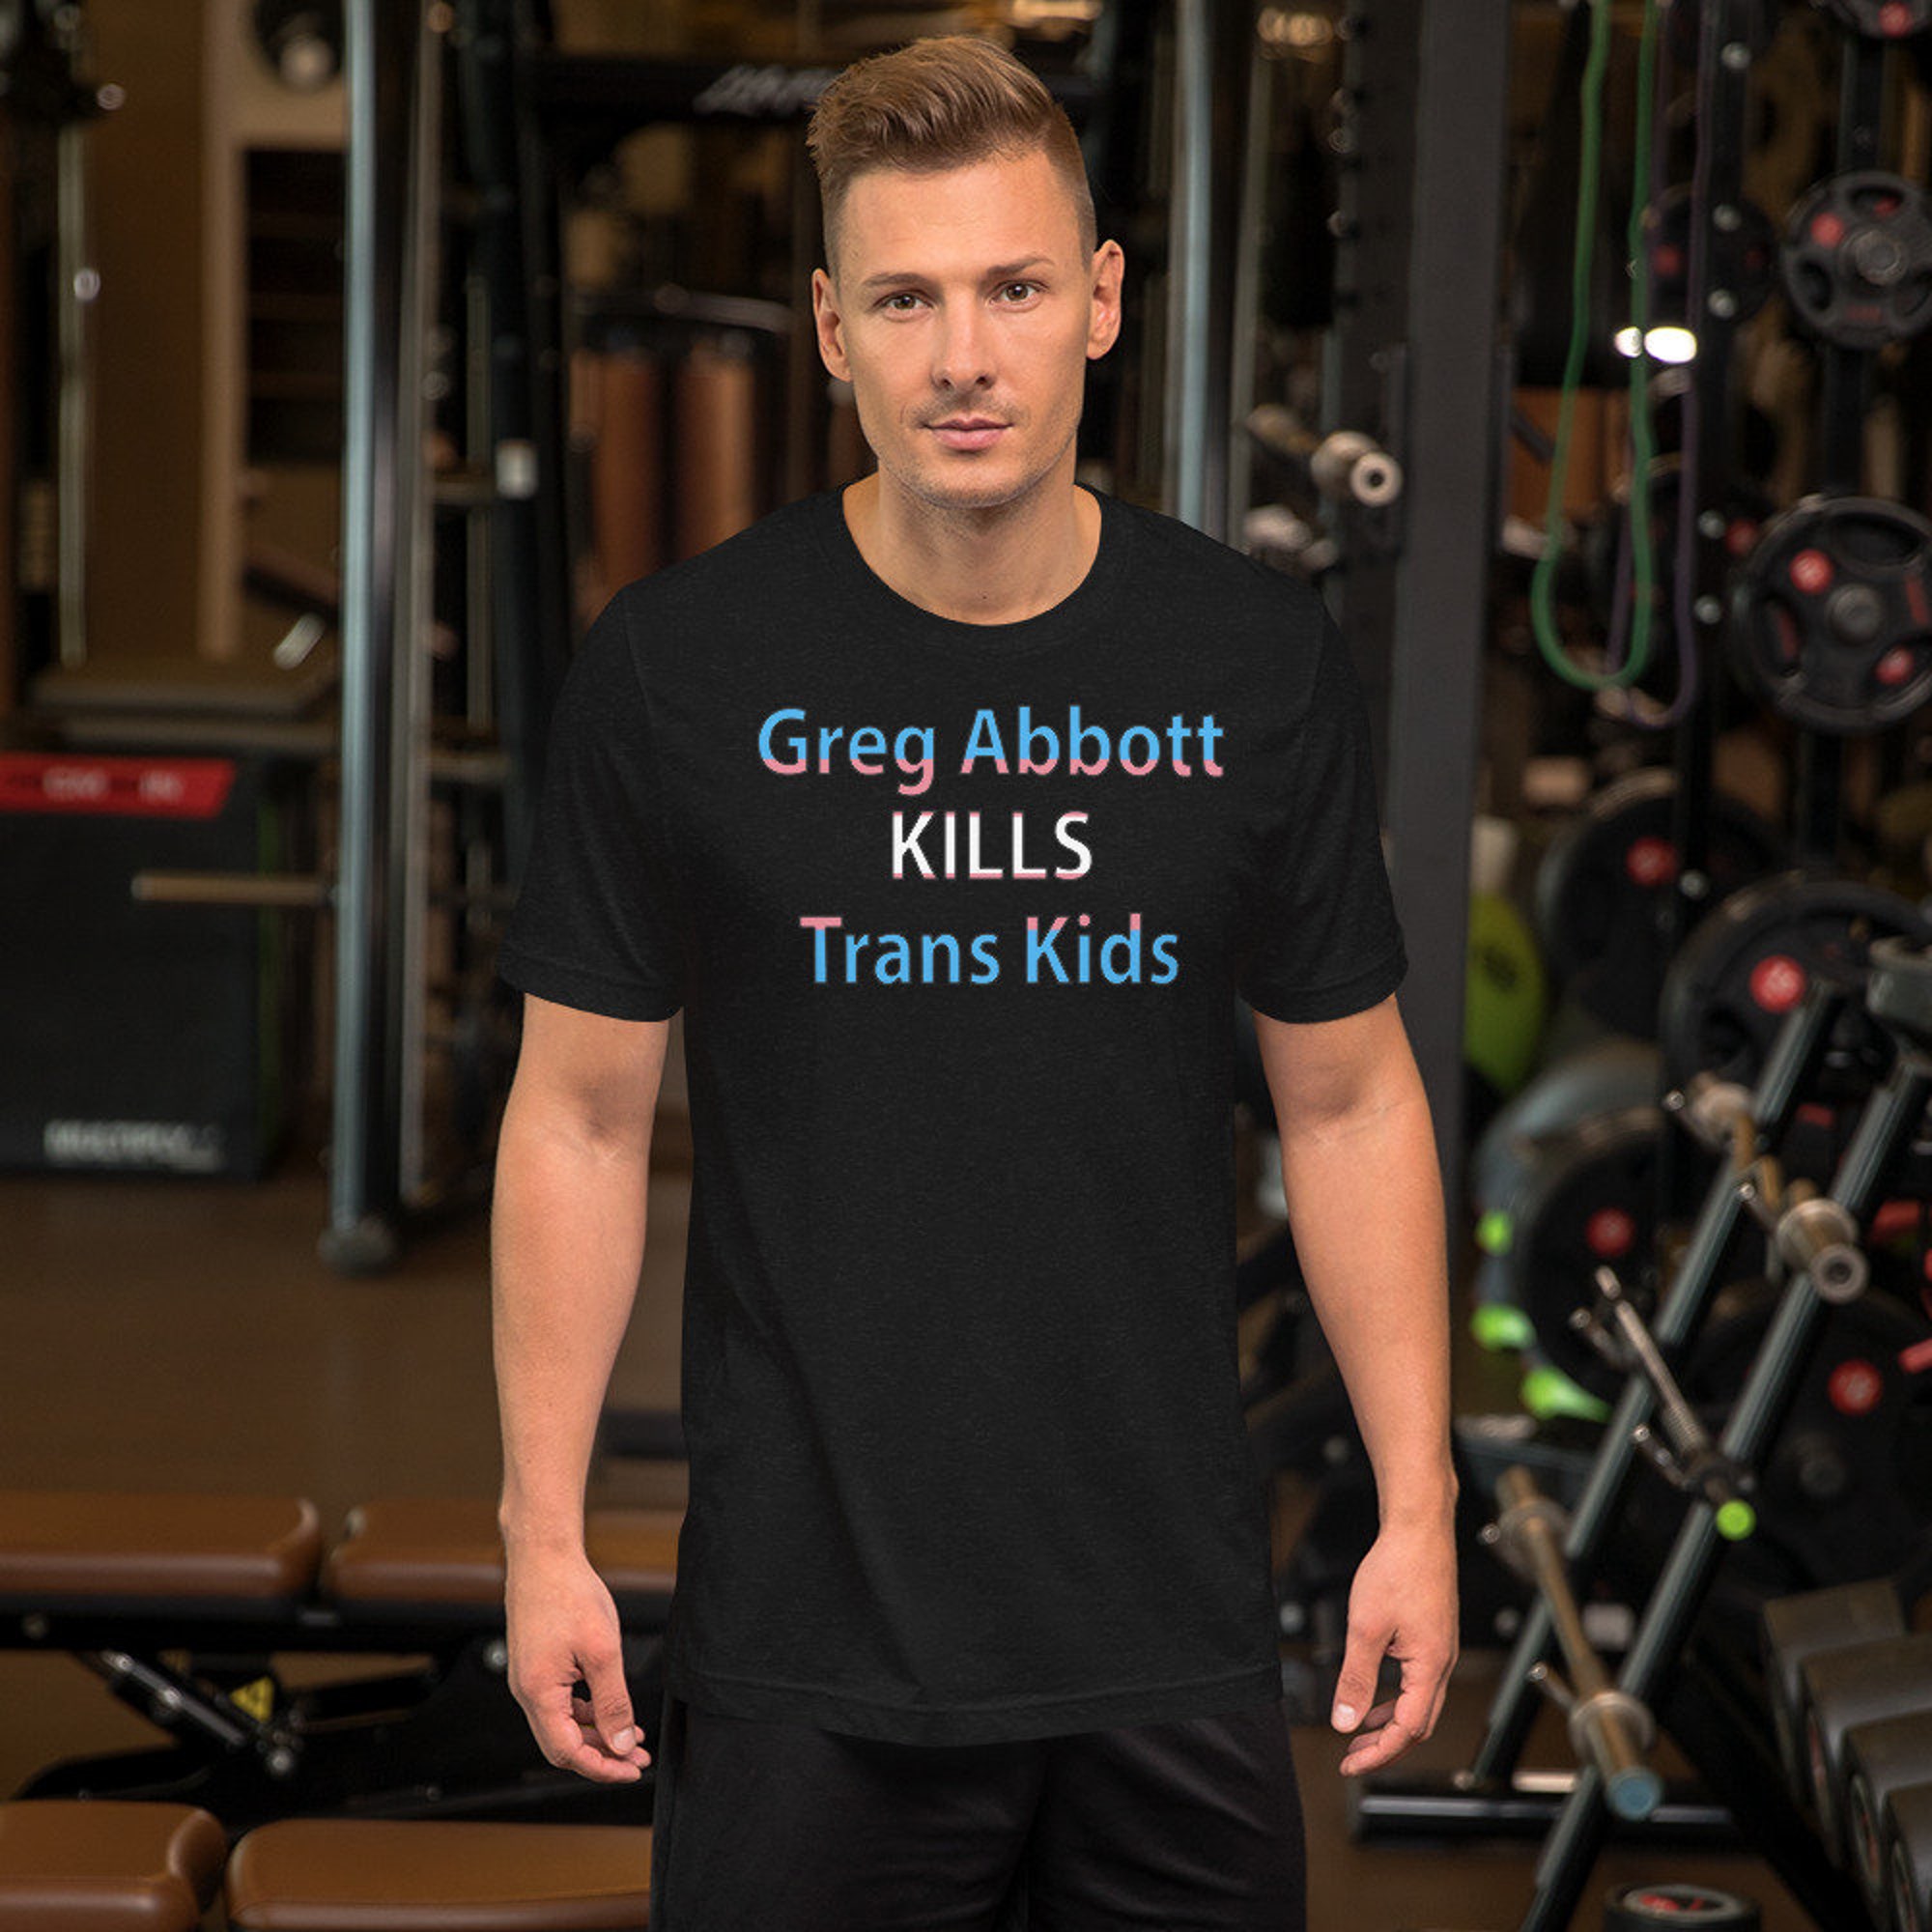 Discover Greg Abbott K!Lls Trans Kids